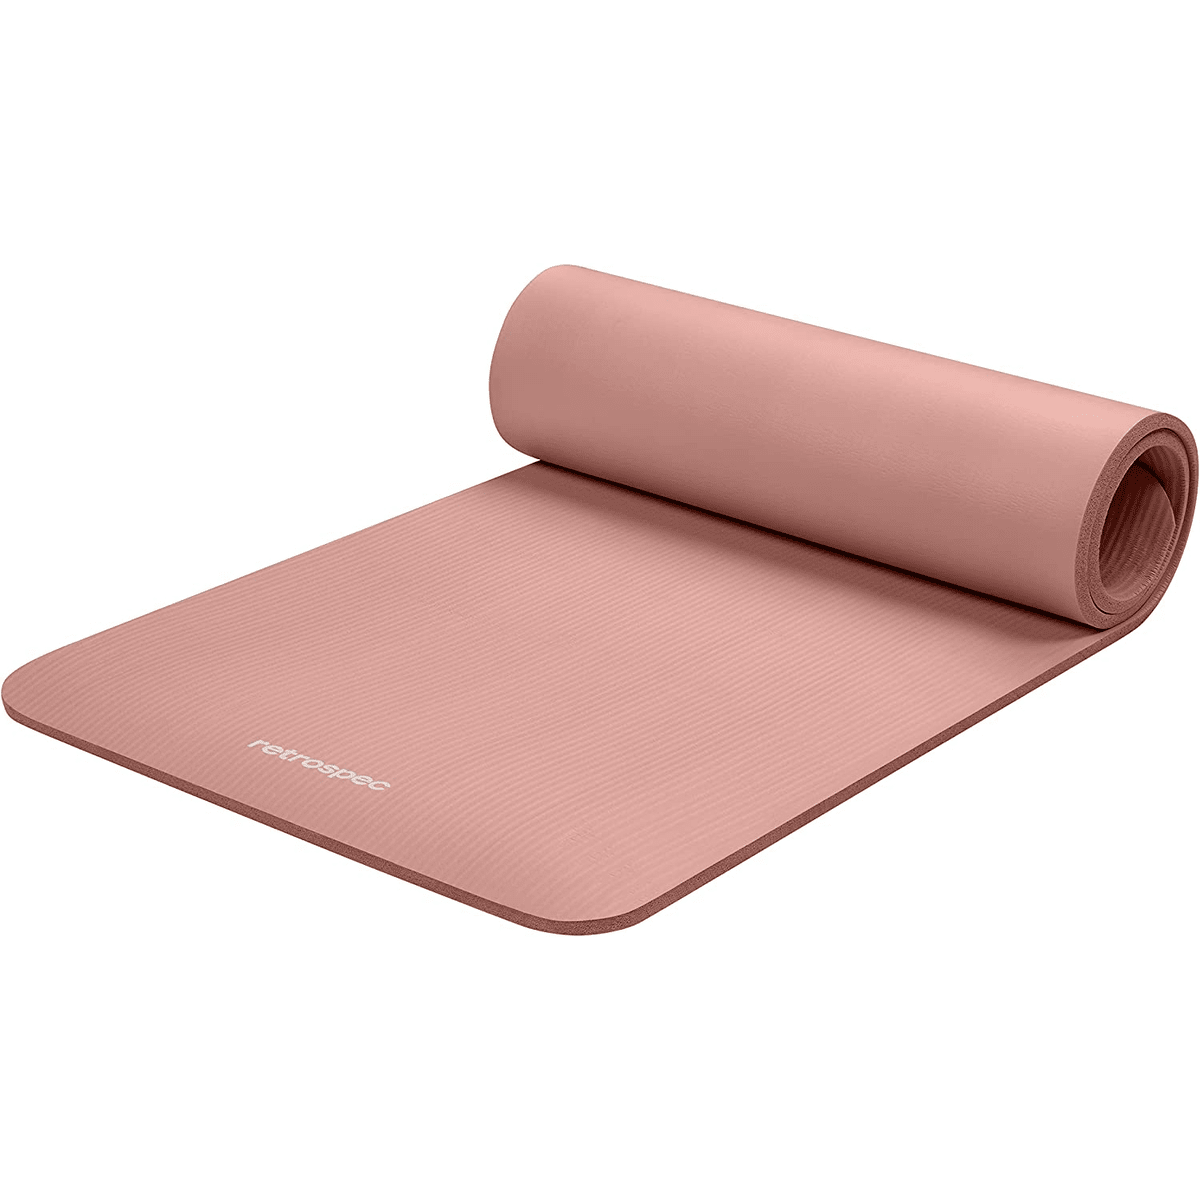 Retrospec Solana Yoga Mat 1 Thick w/Nylon Strap for Men & Women - Non Slip  Excercise Mat for Yoga, Pilates, Stretching, Floor & Fitness Workouts Blue  Mist 1 inch 36.22 - Quarter Price